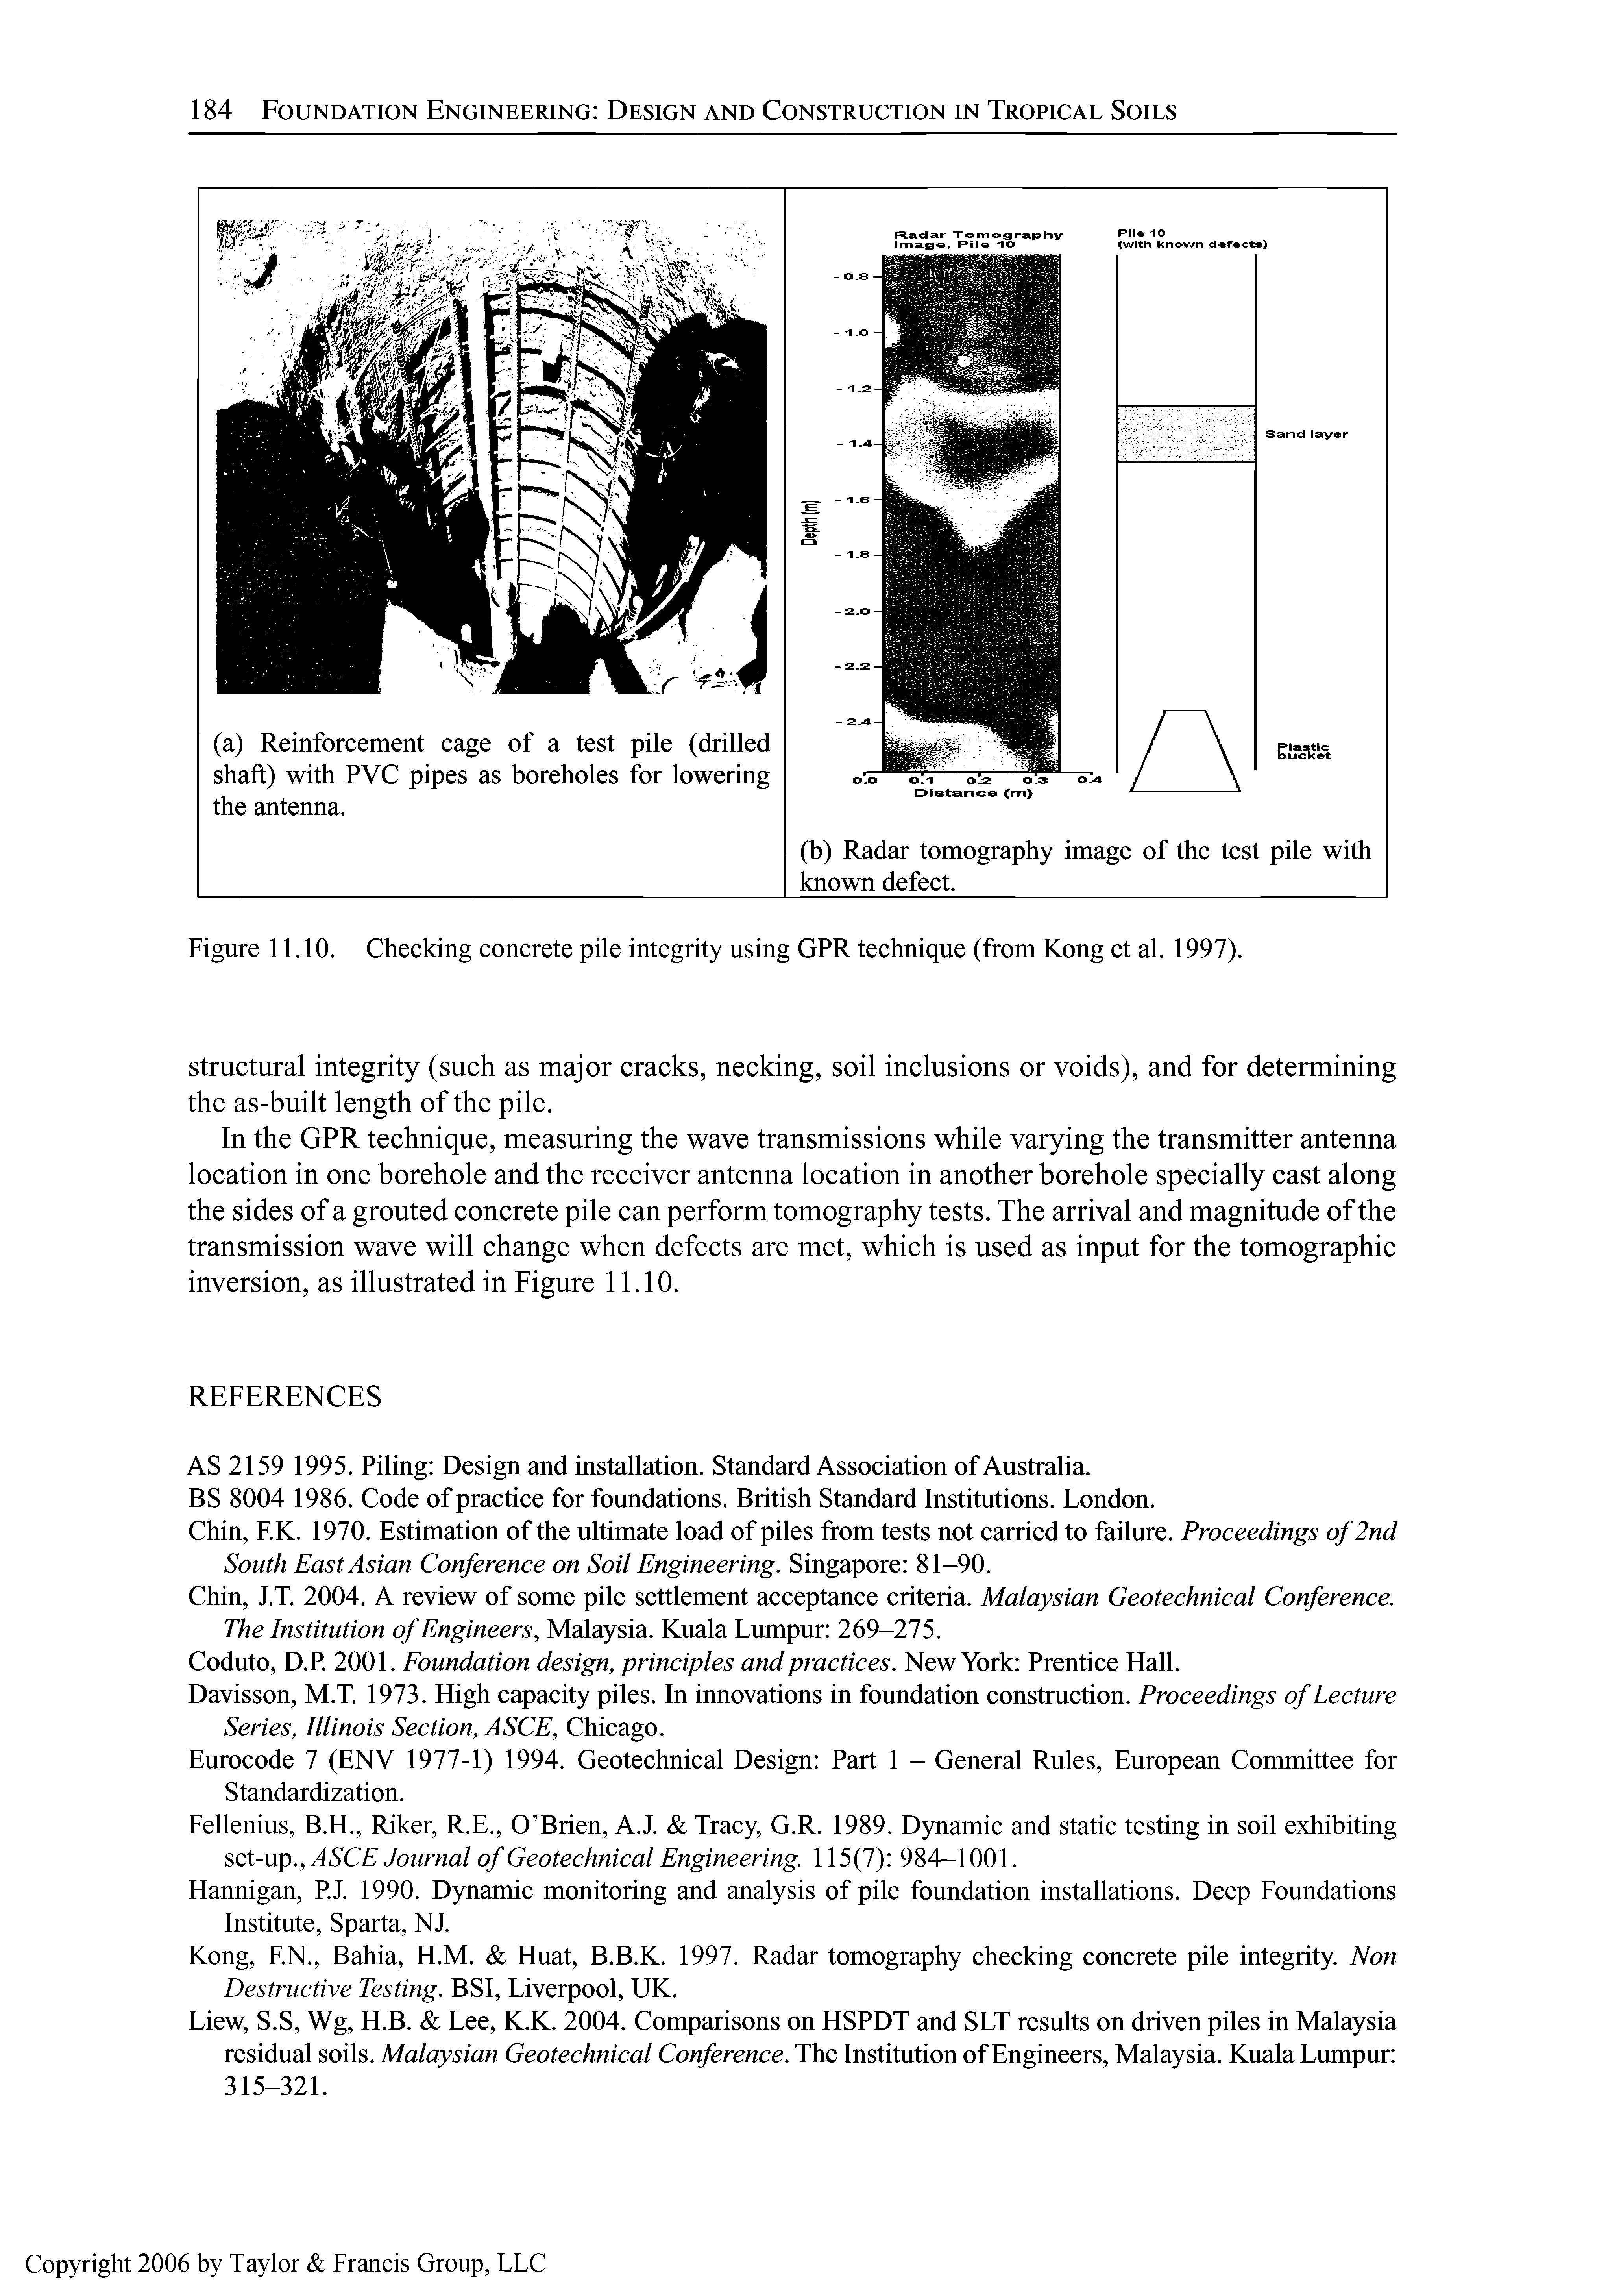 Figure 11.10. Checking concrete pile integrity using GPR technique (from Kong et al. 1997).